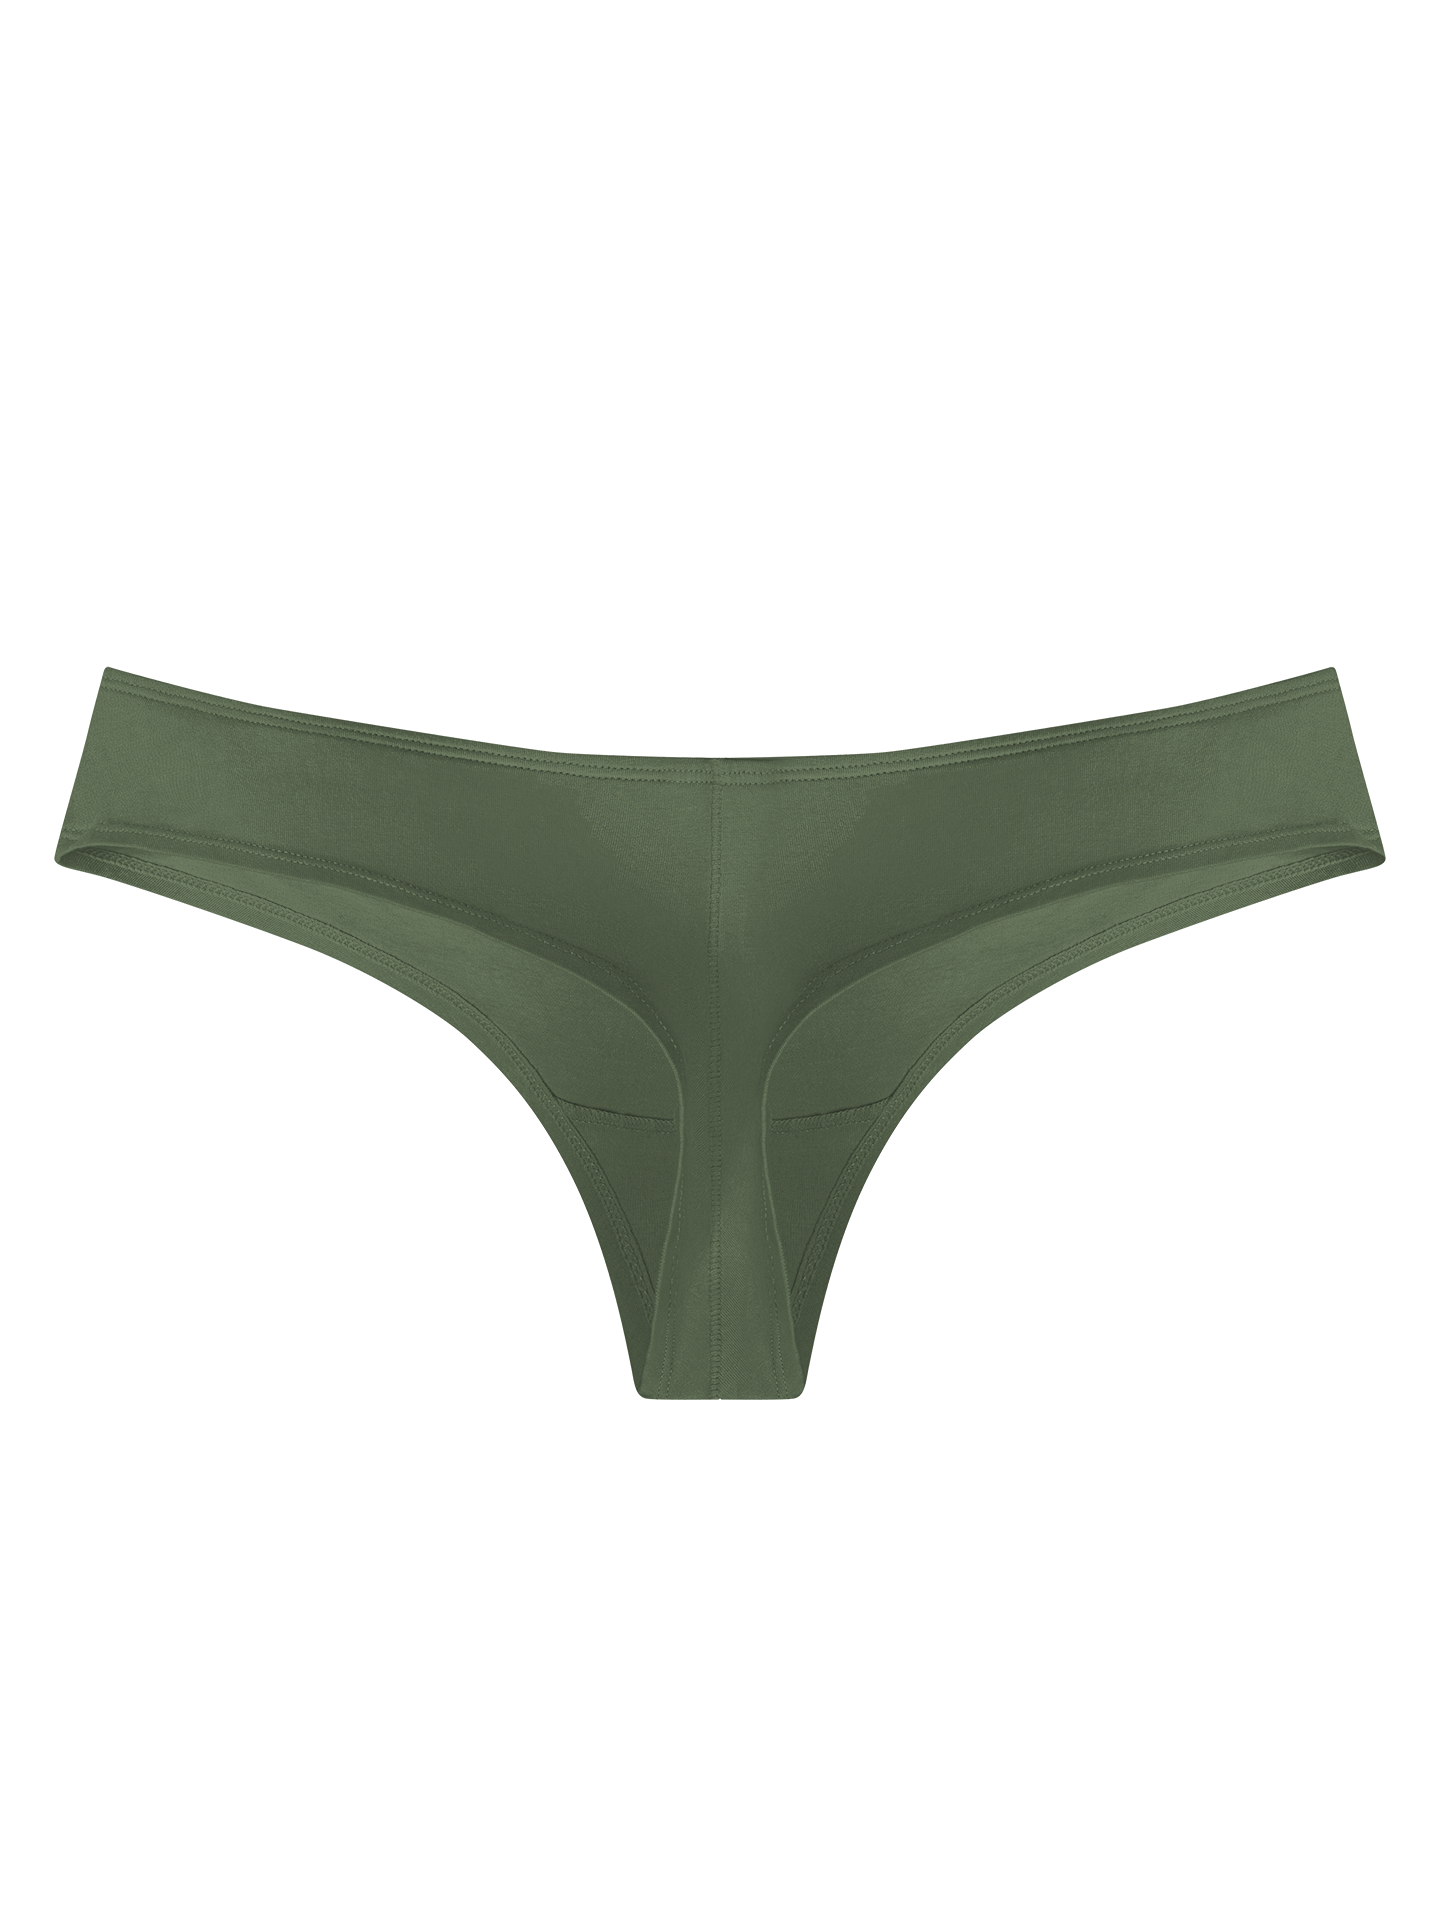 Ivy Green Women's Brazilian Panties